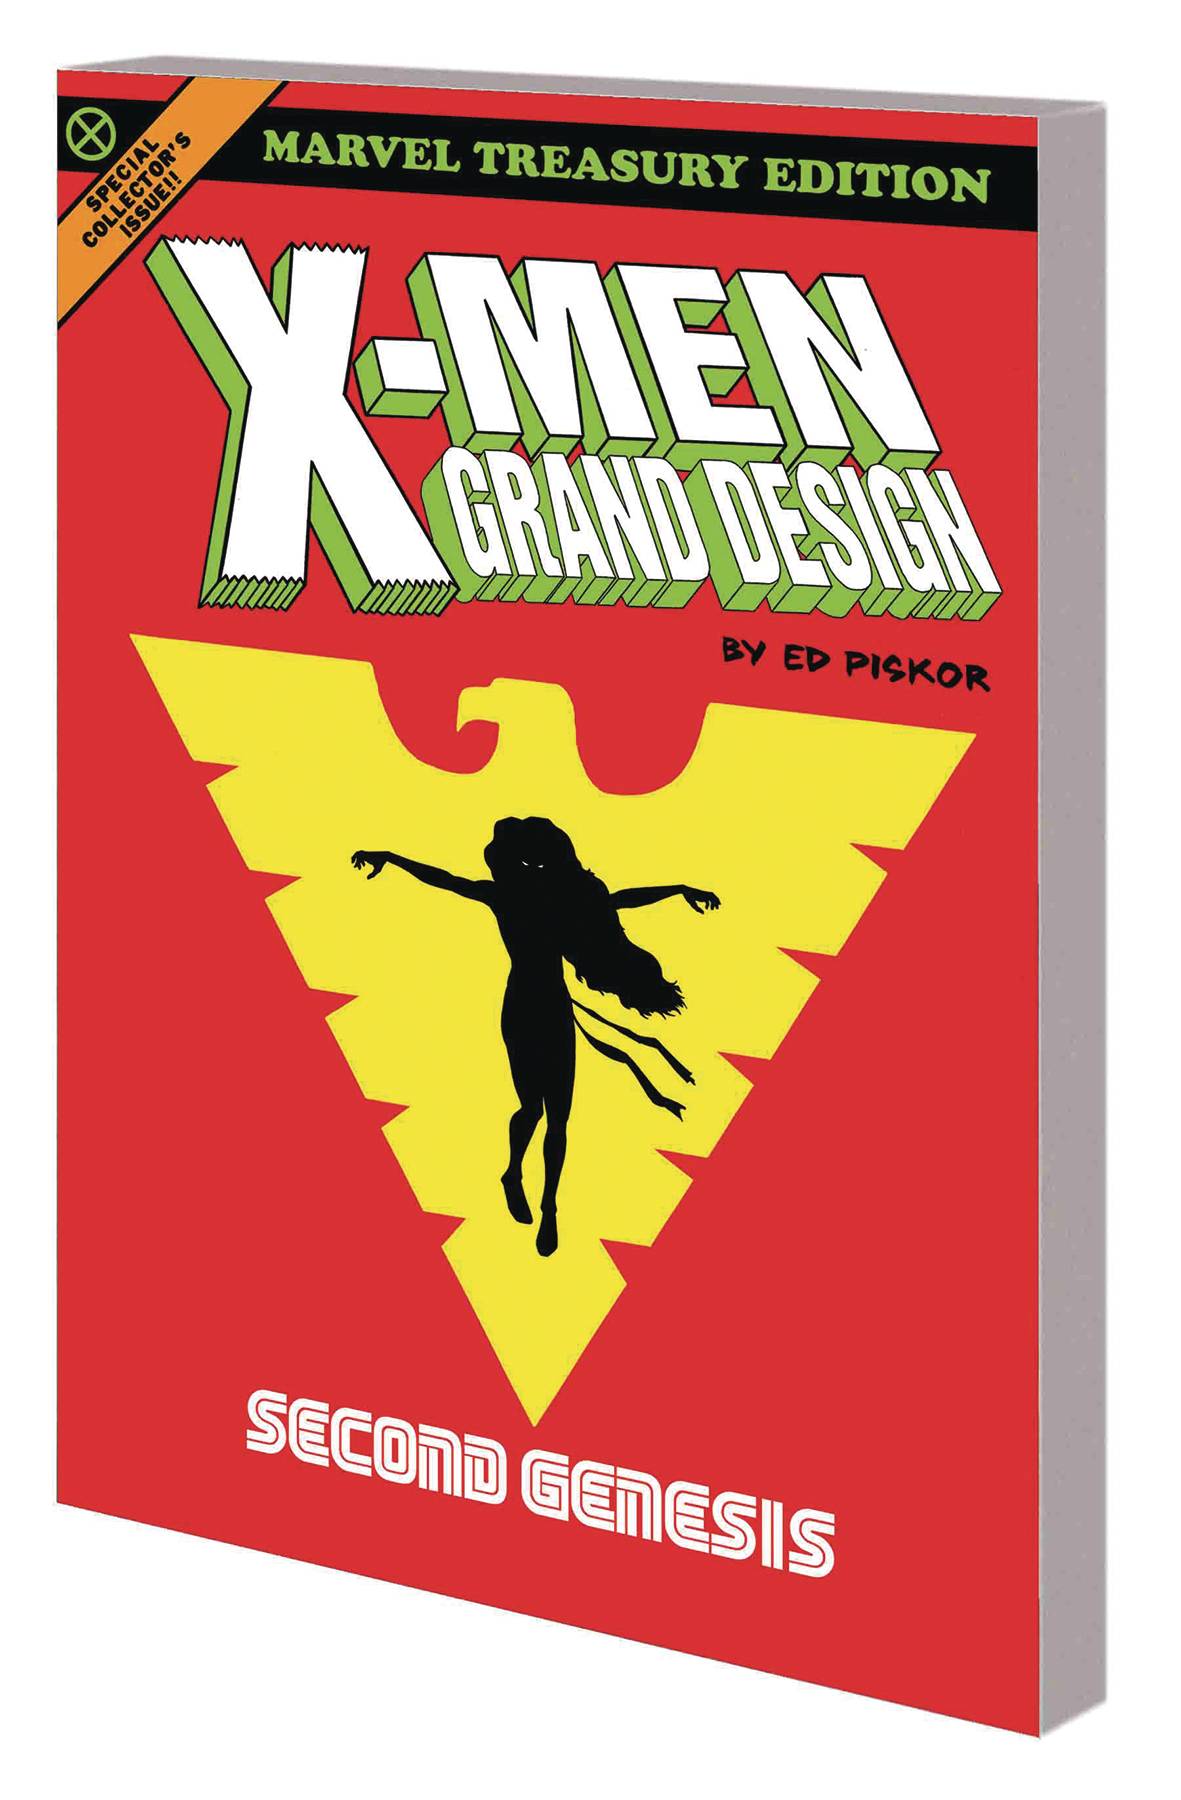 X-Men Grand Design Second Genesis Graphic Novel